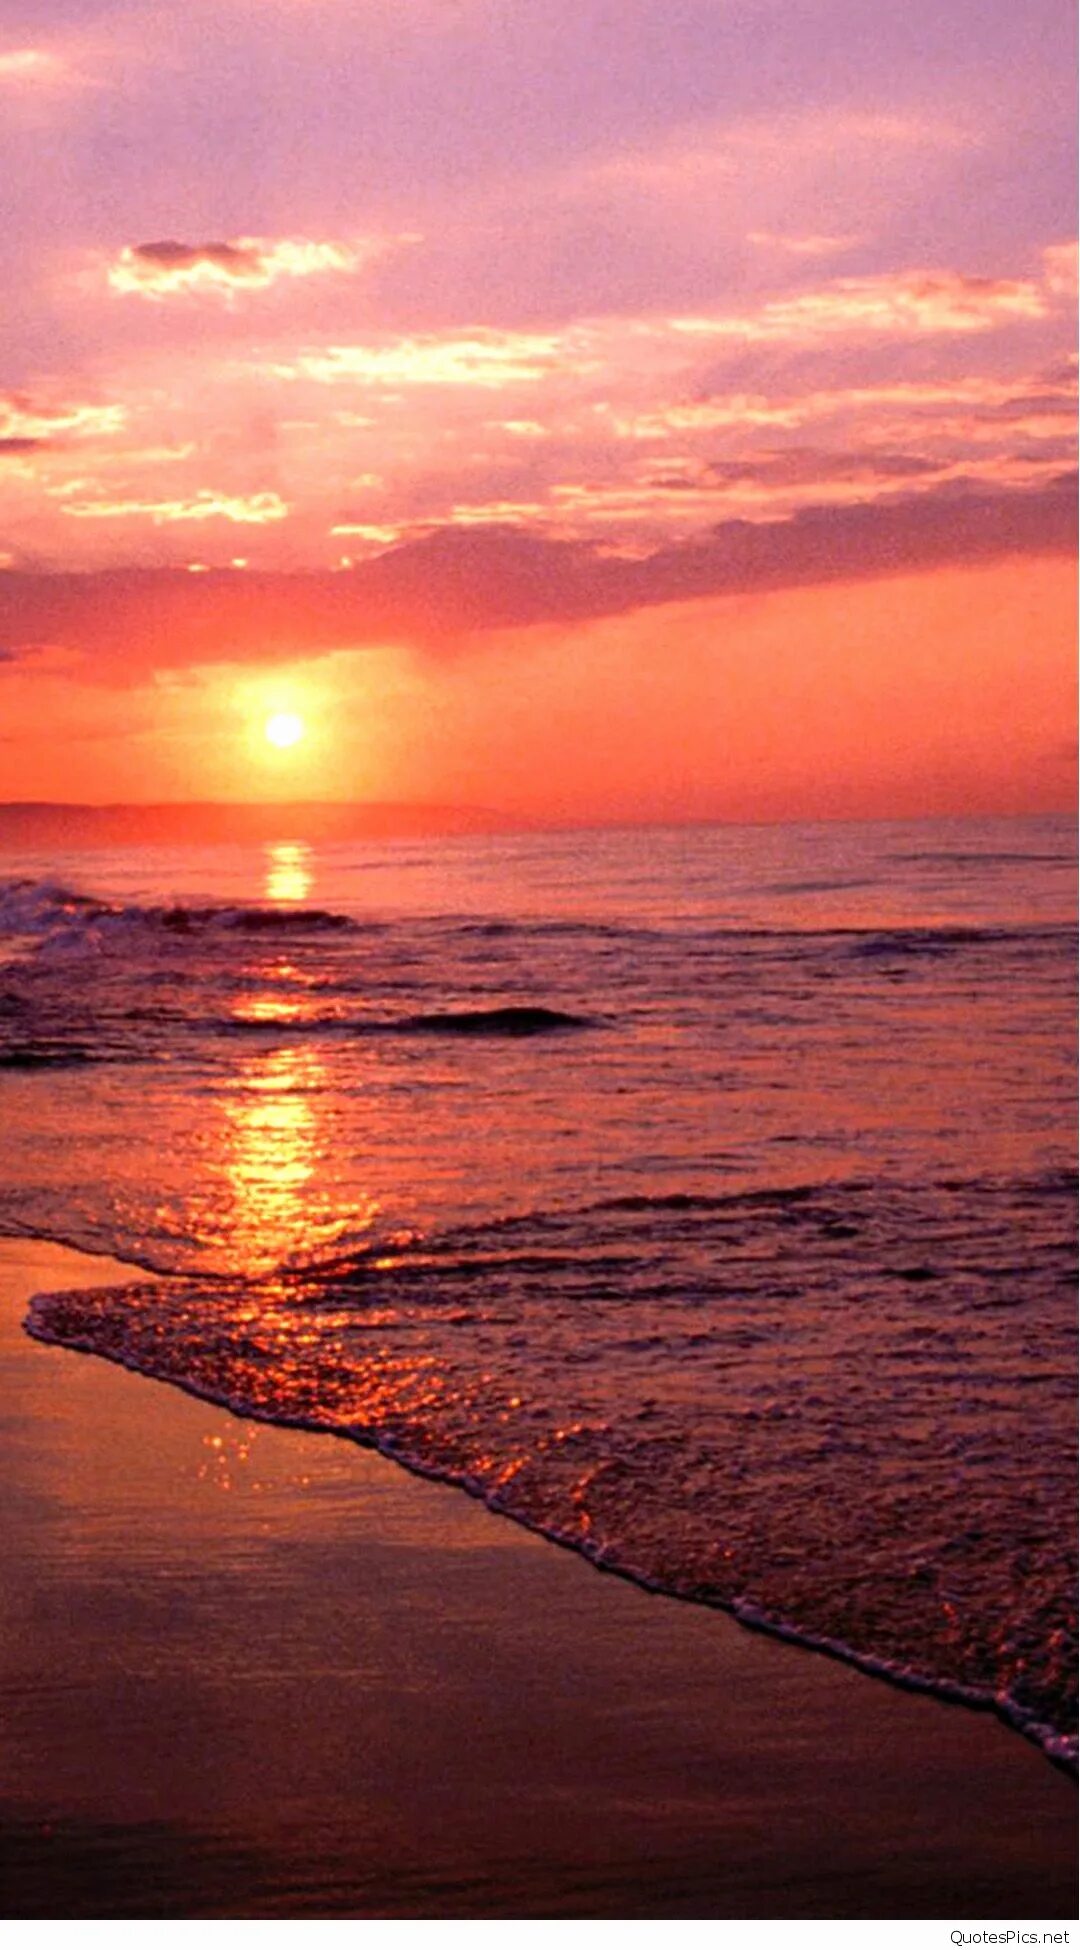 Сансет Бич закат. Морской закат. Рассвет на море. Красивый закат на море. Фото красивых обложек